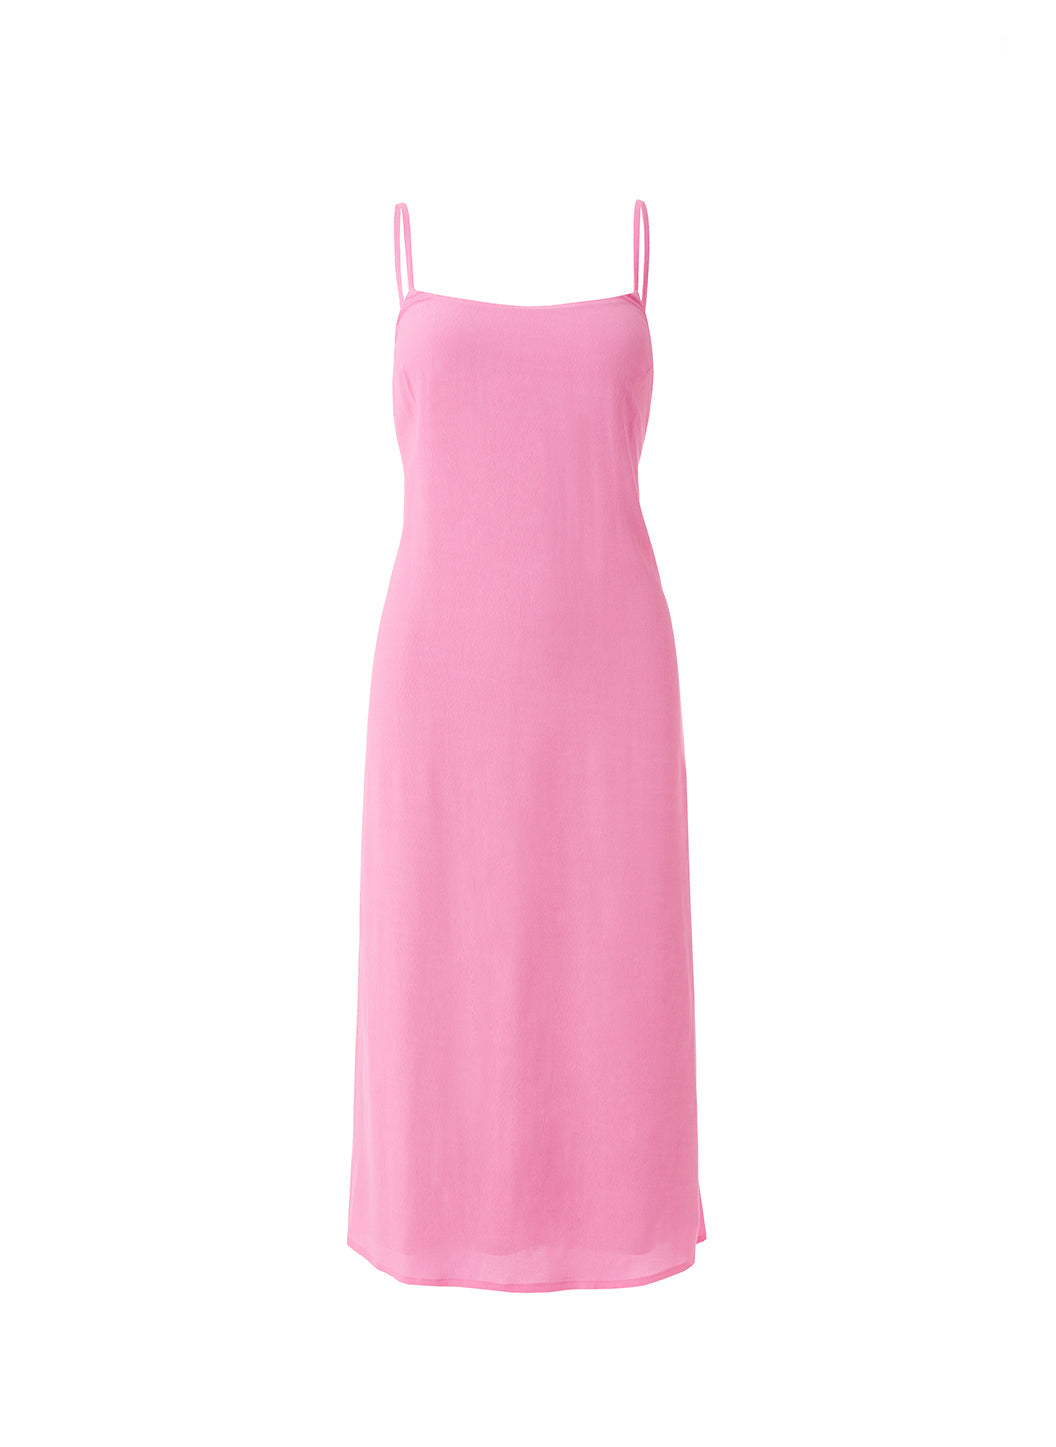 Primrose Rose Dress cutout